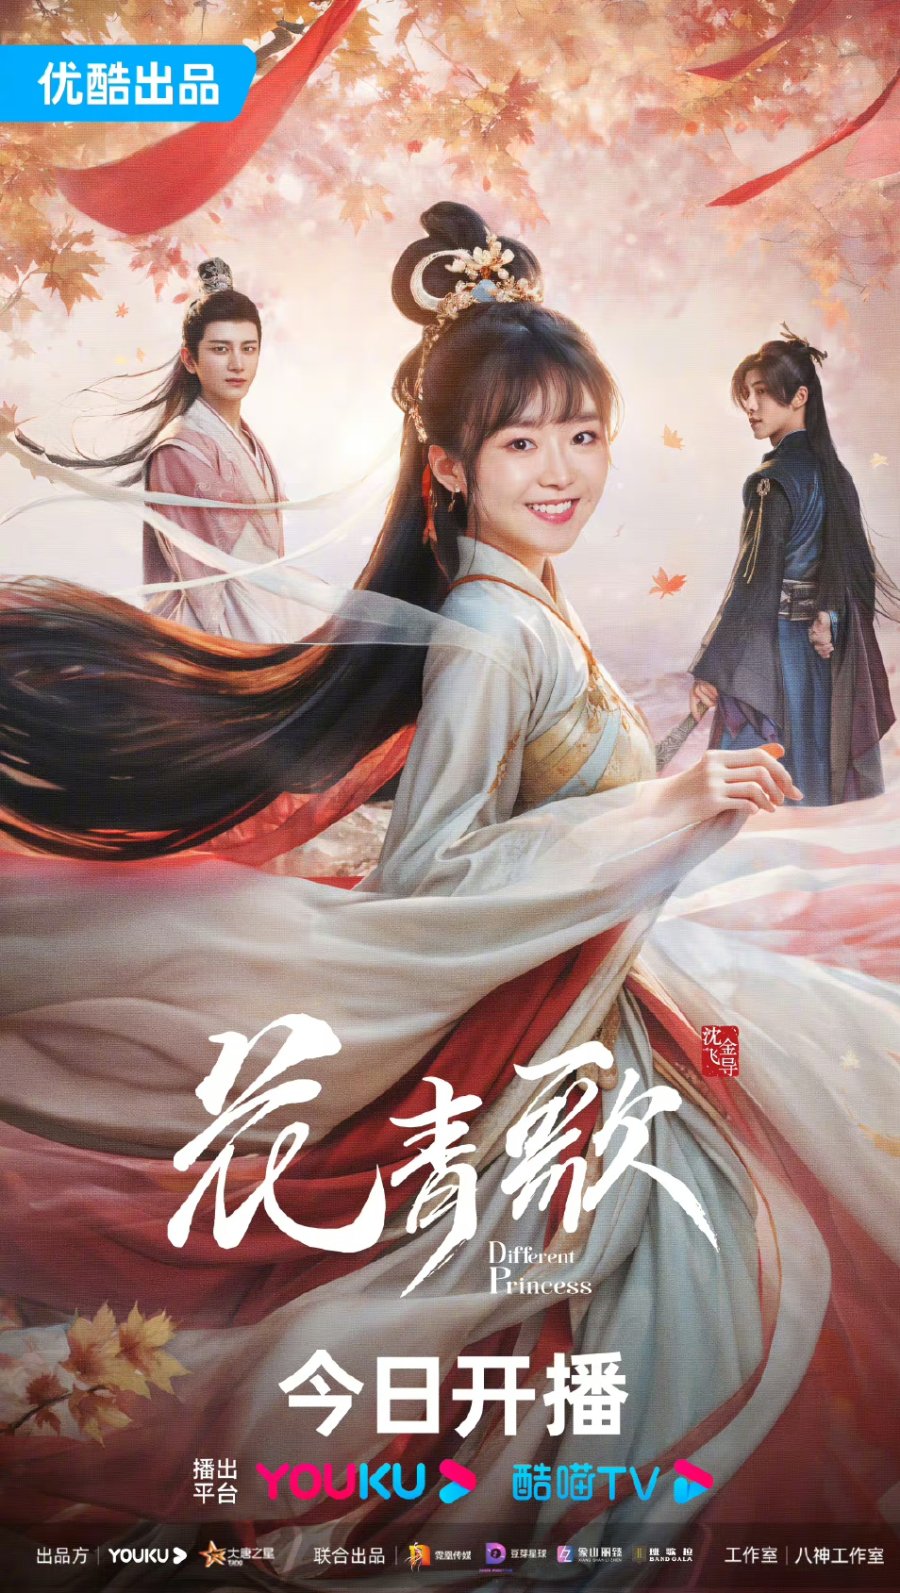 سریال چینی Different Princess